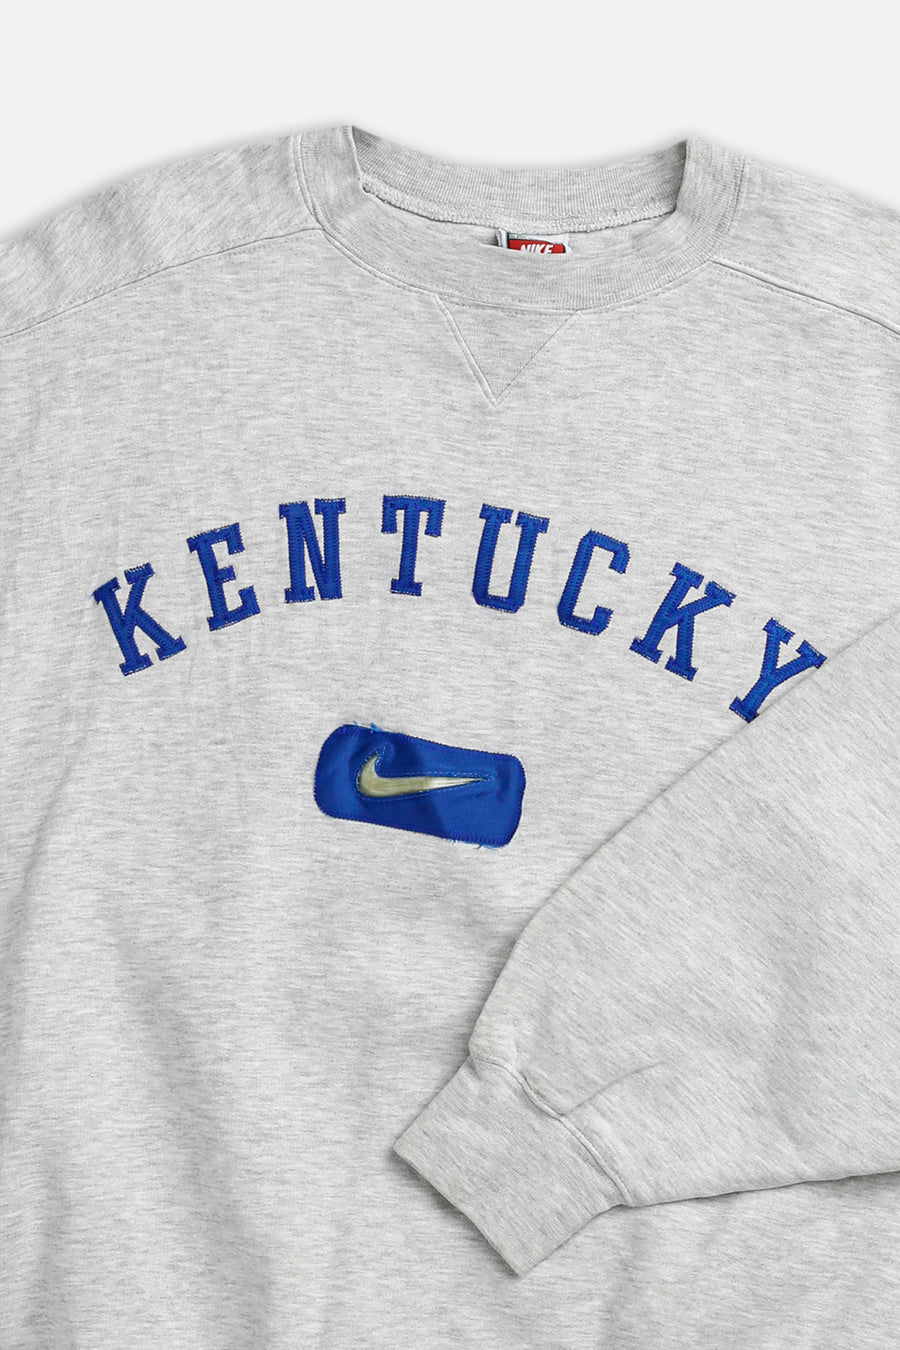 Vintage Kentucky Nike Team Sweatshirt - XL